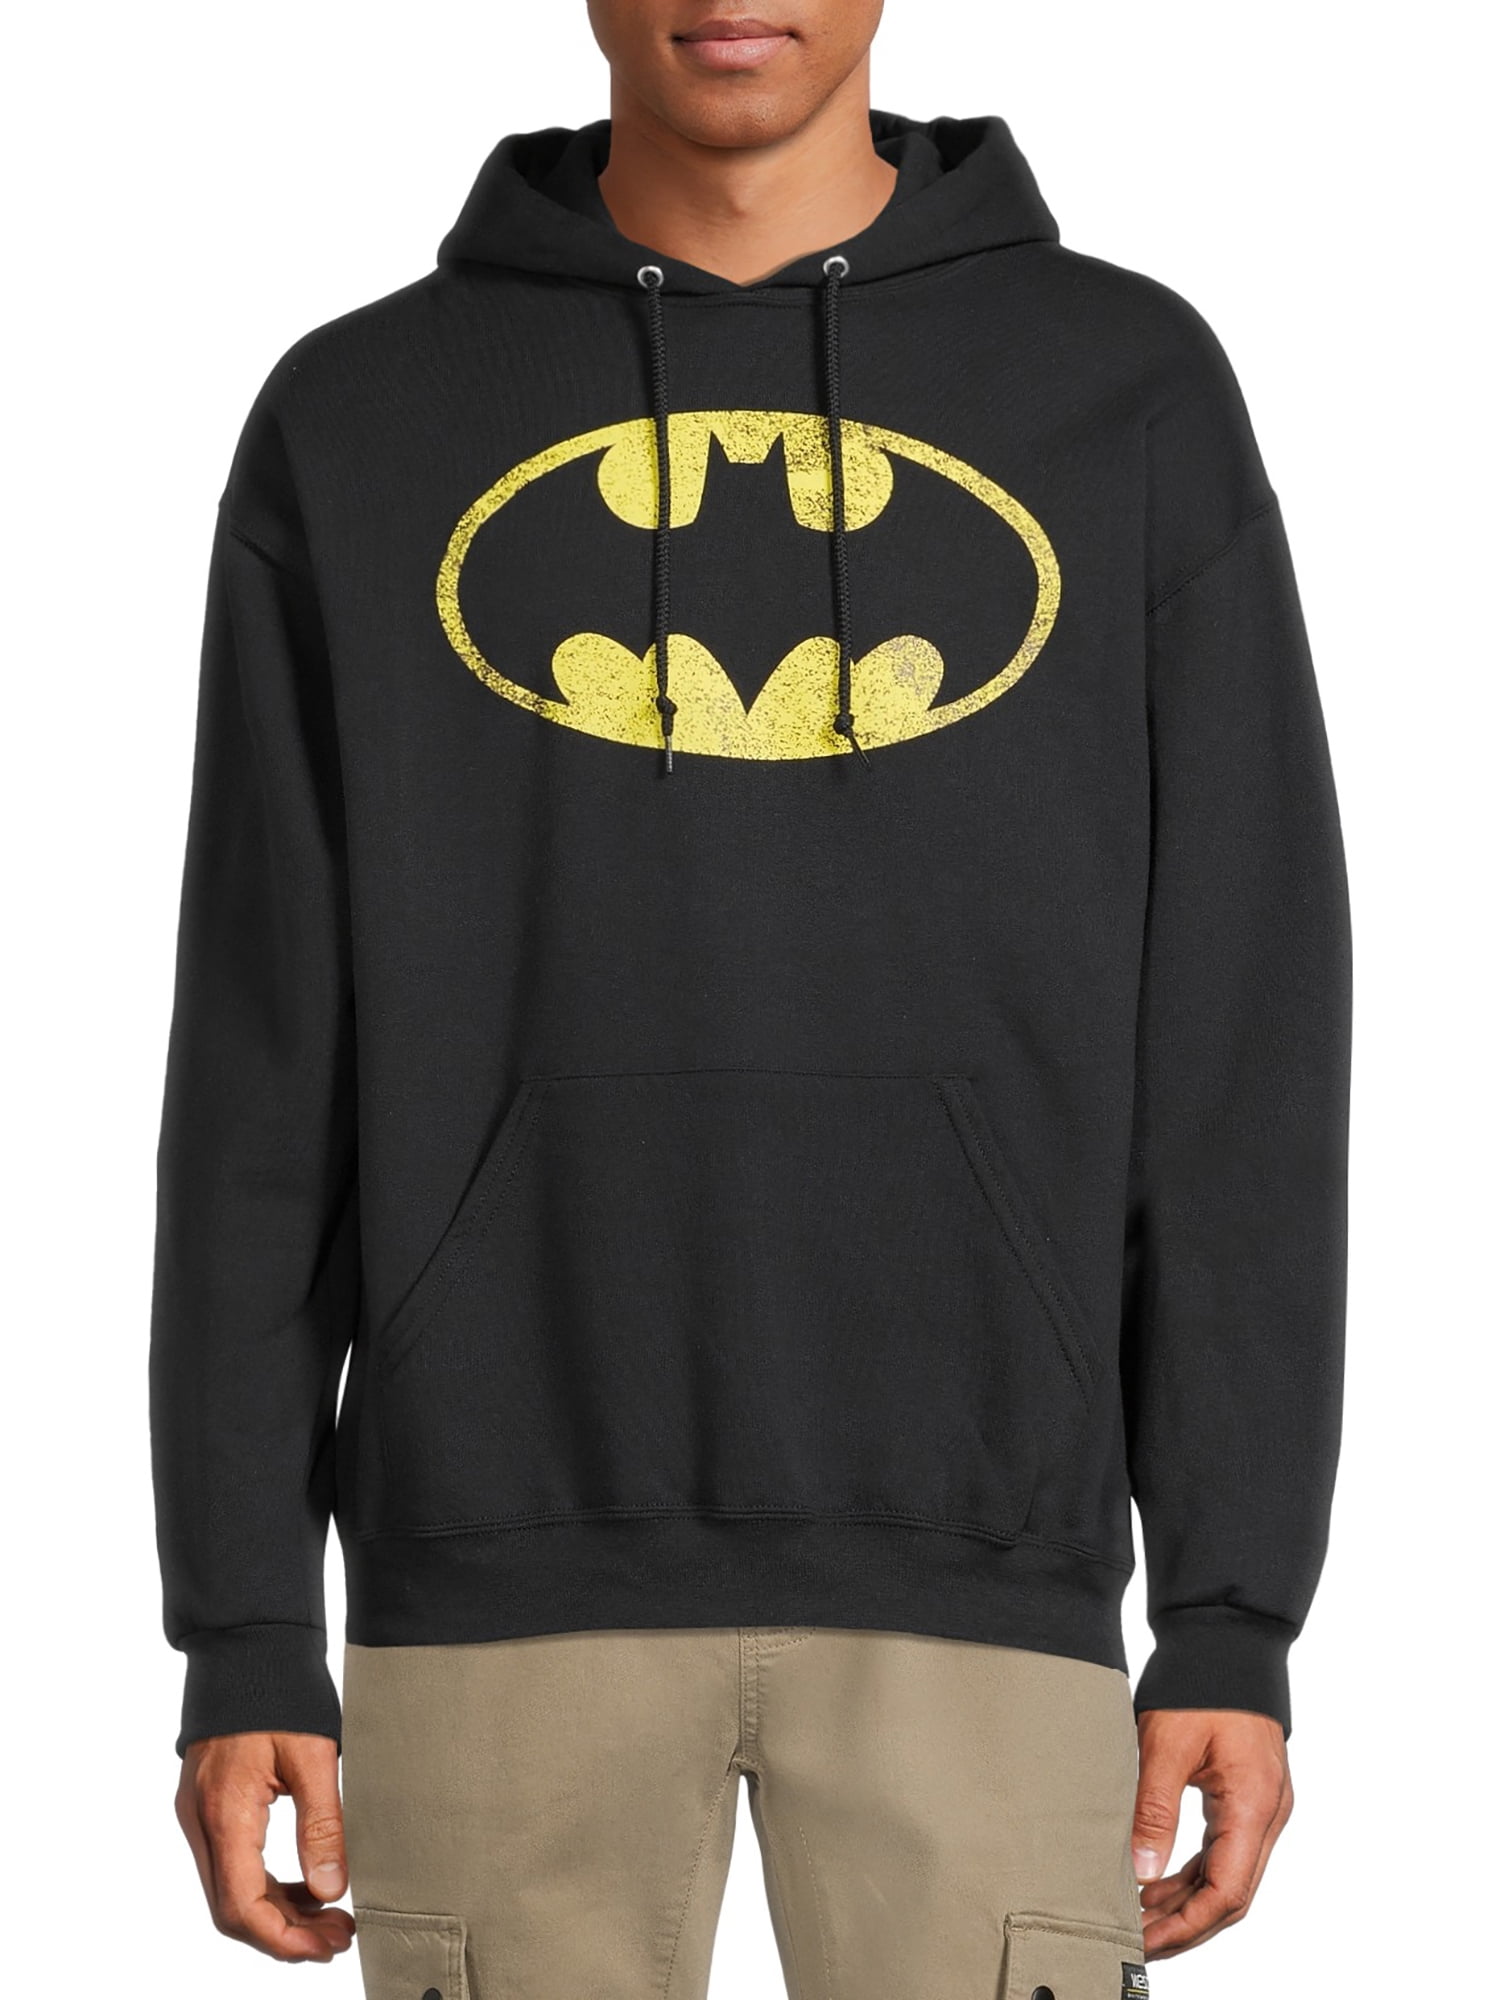 Boys Gray and Black DC Comics Hero Batman Logo Zip Up Costume Hoodie Sweatshirt 